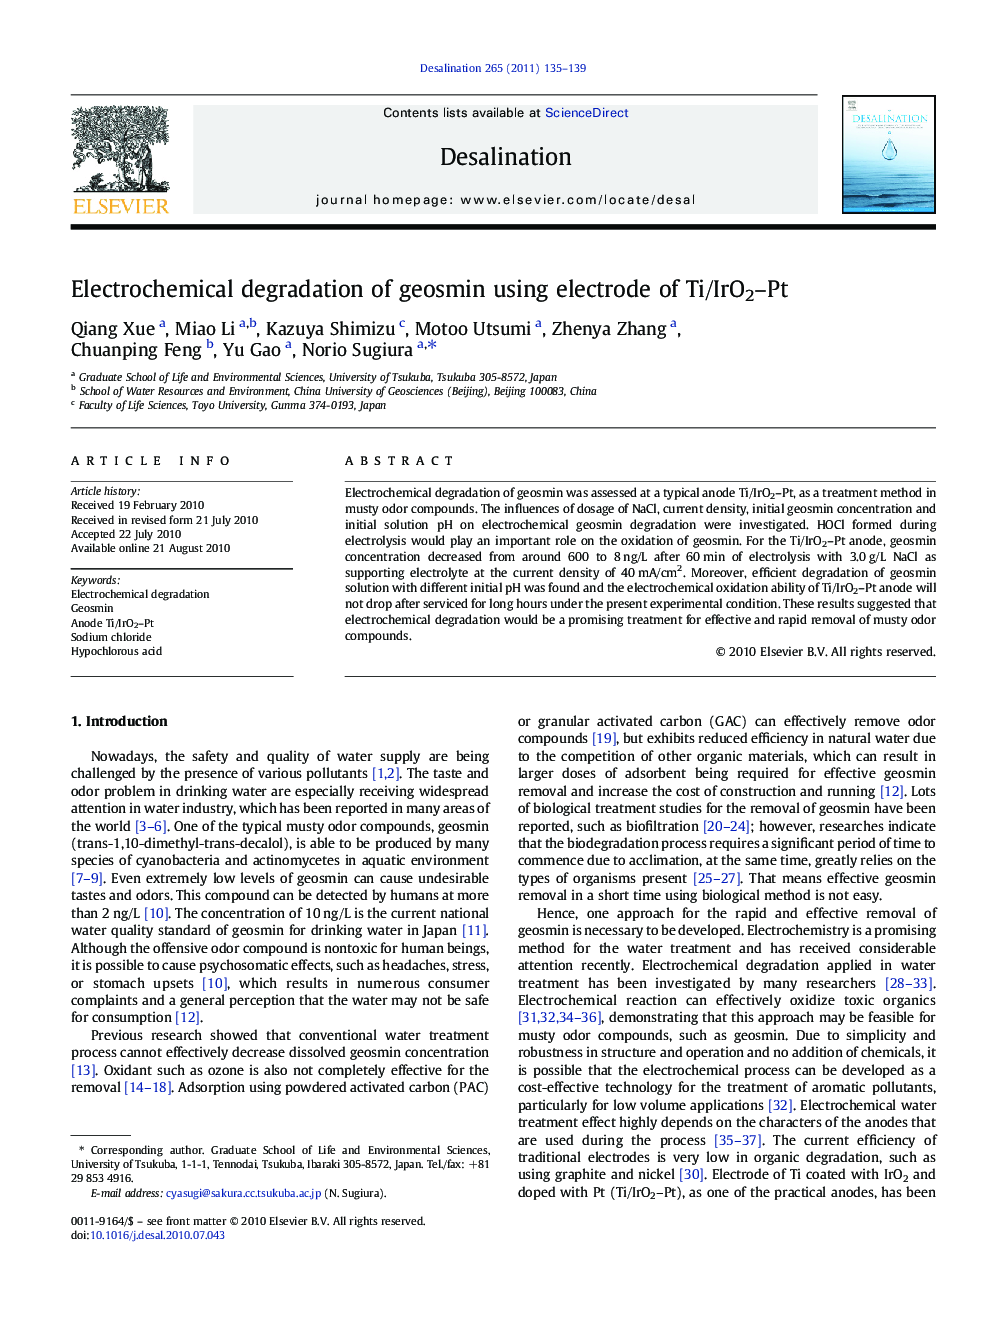 Electrochemical degradation of geosmin using electrode of Ti/IrO2–Pt